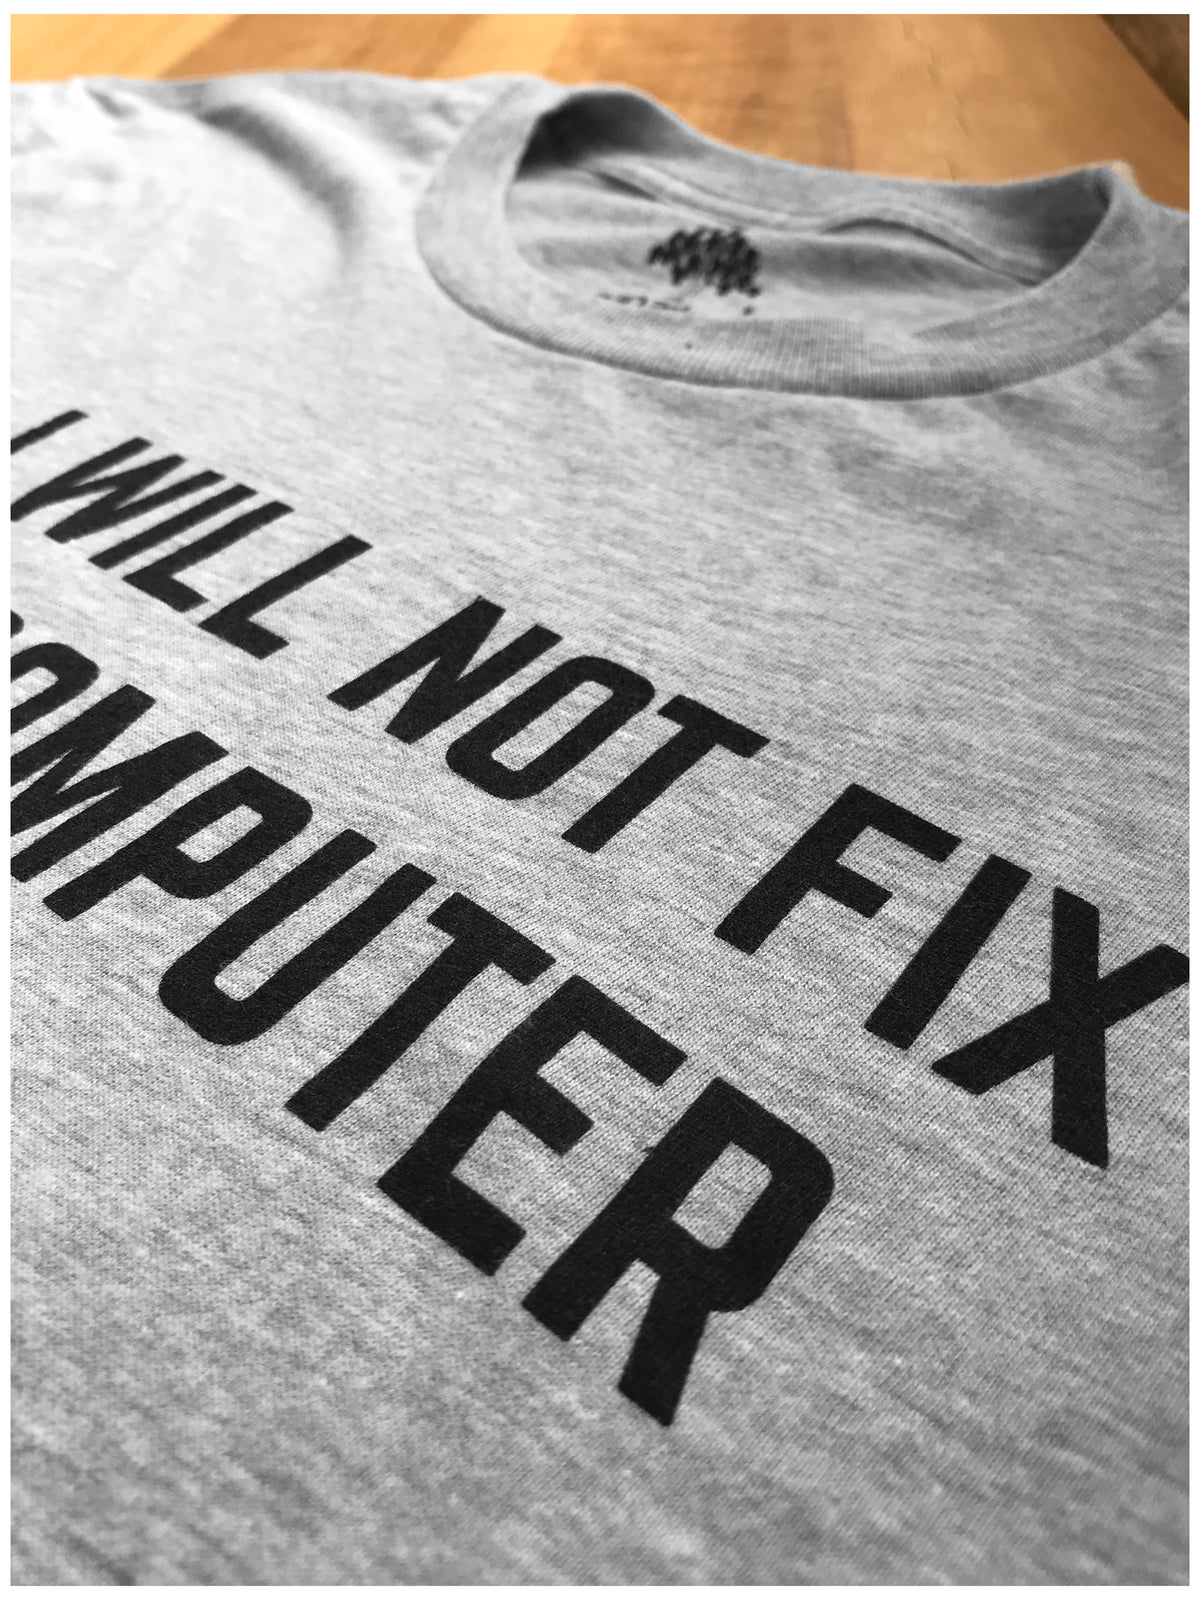 No I Will Not Fix Your Computer Funny IT Joke Geek Geeky Nerd Men's T-shirt